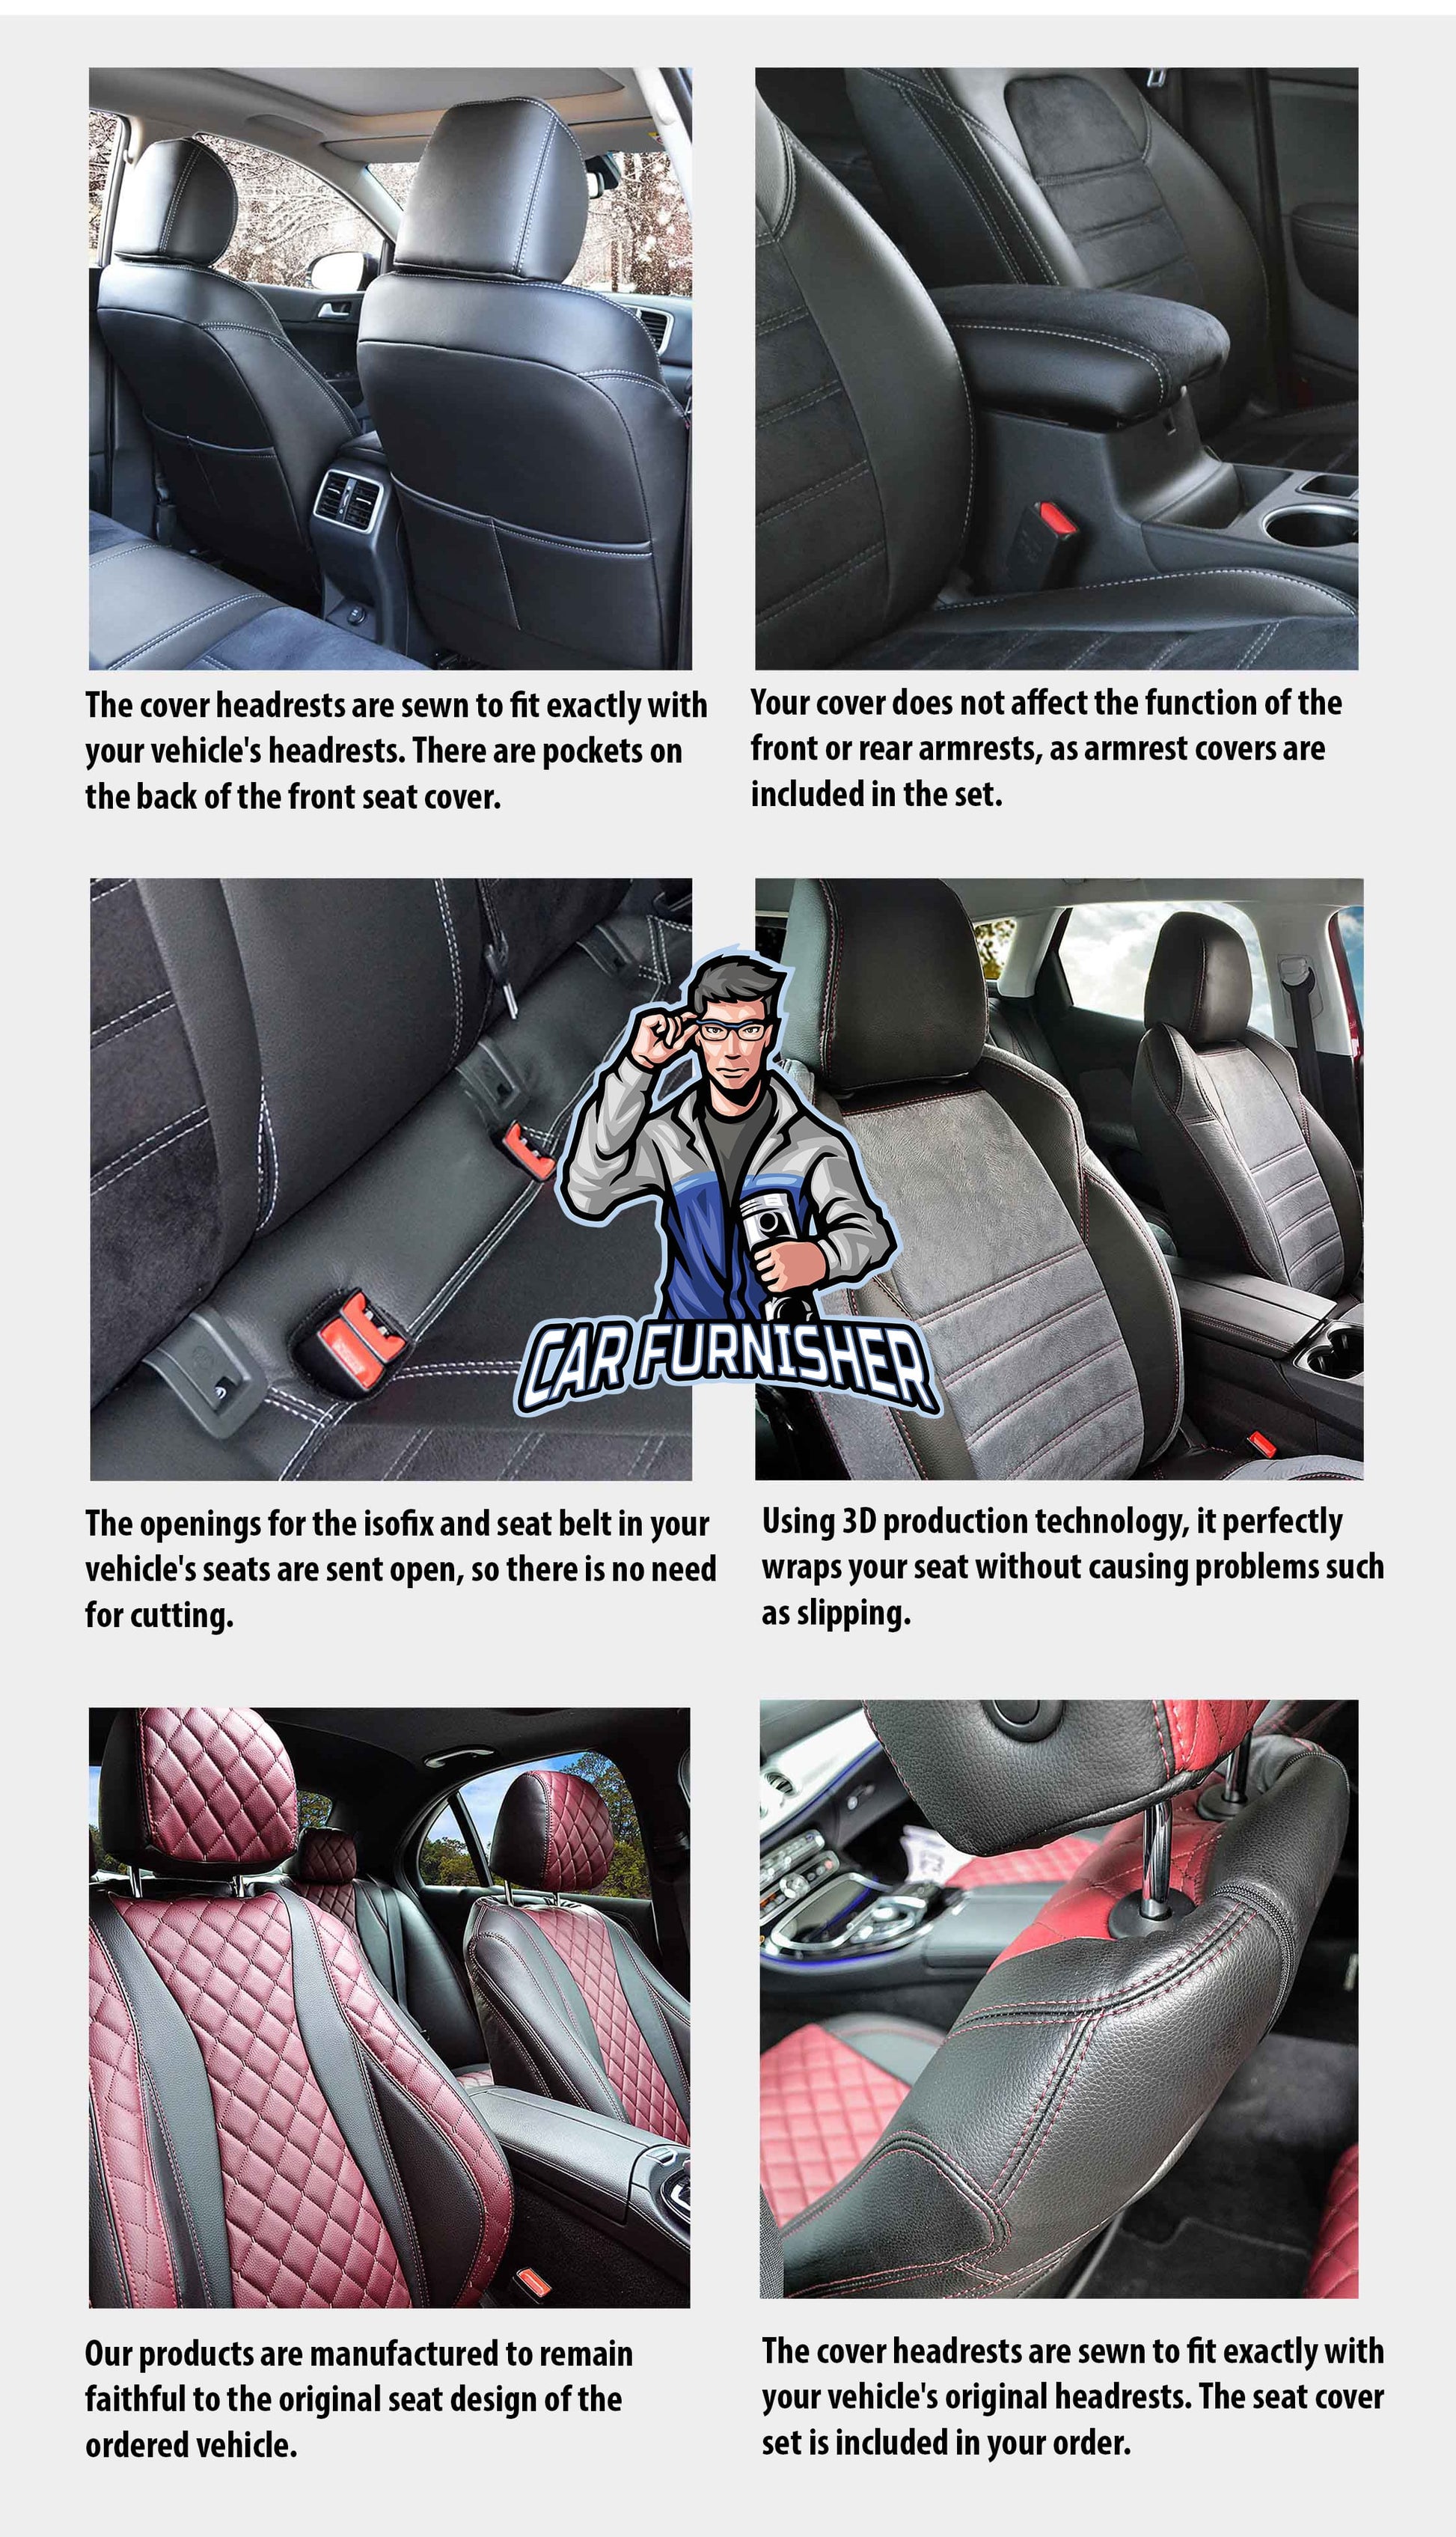 Tata Xenon Seat Covers Camouflage Waterproof Design Gobi Camo Waterproof Fabric